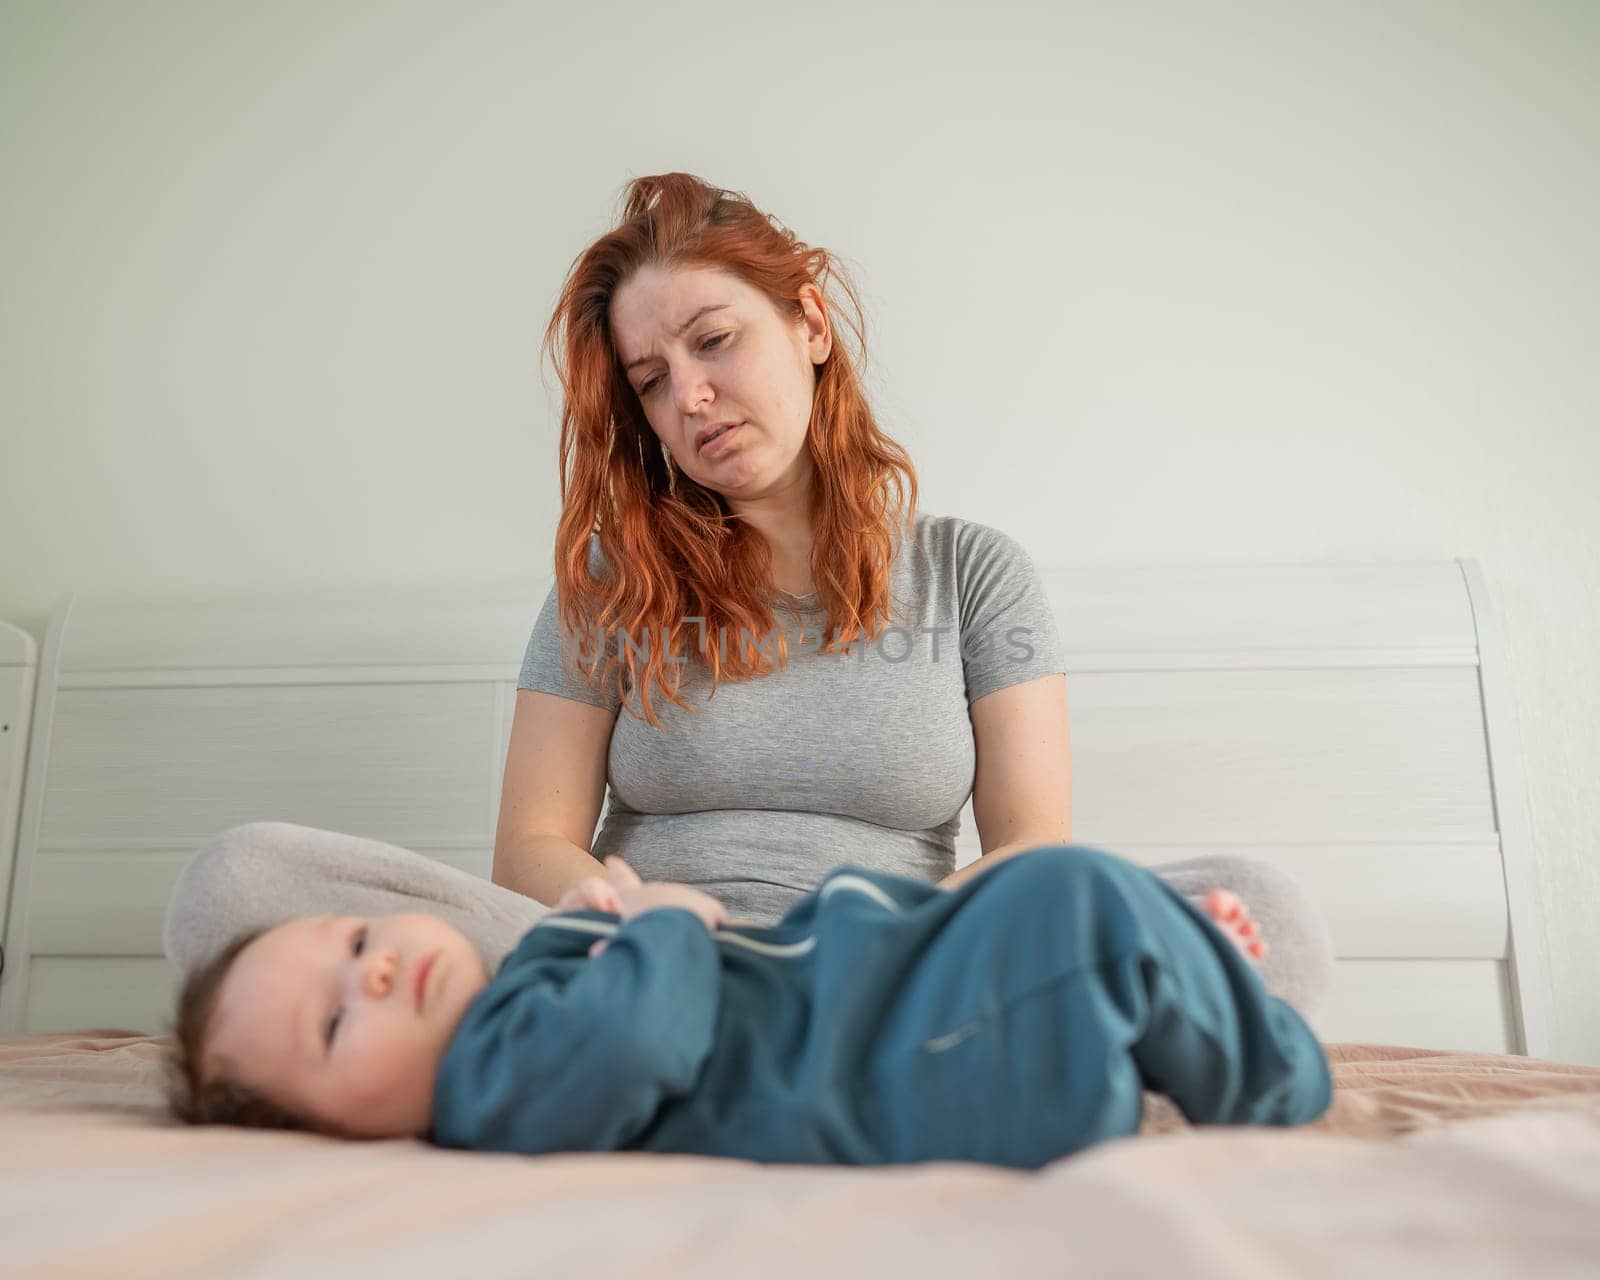 Woman with postpartum depression sitting on bed next to newborn